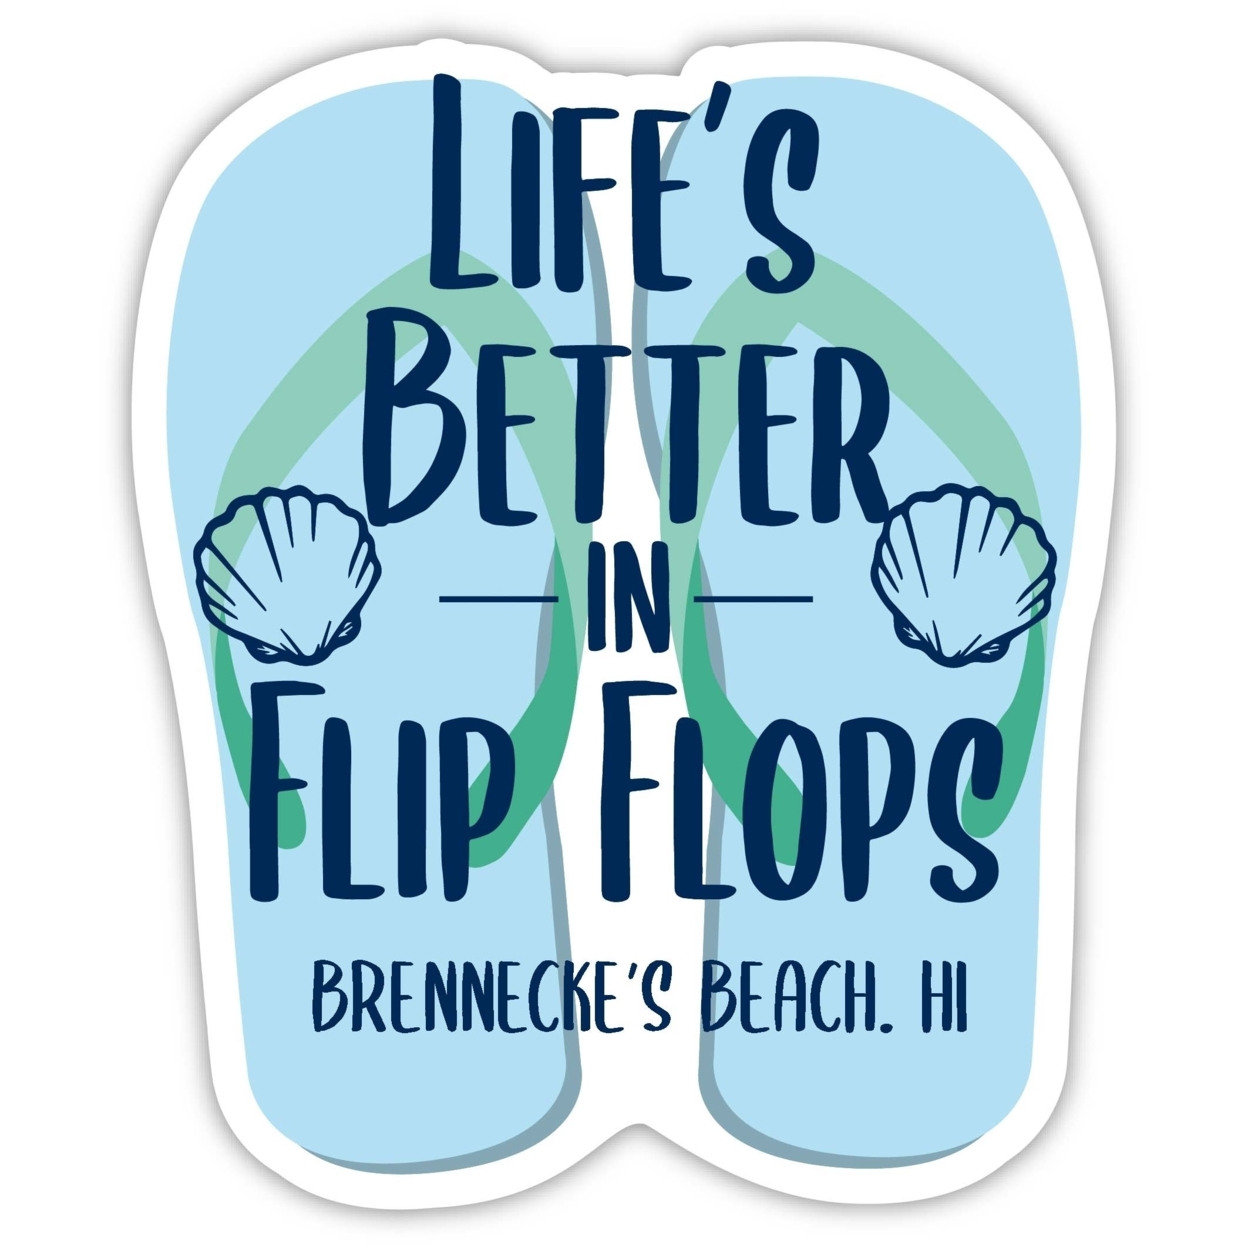 Brennecke'S Beach Hawaii Souvenir 4 Inch Vinyl Decal Sticker Flip Flop Design